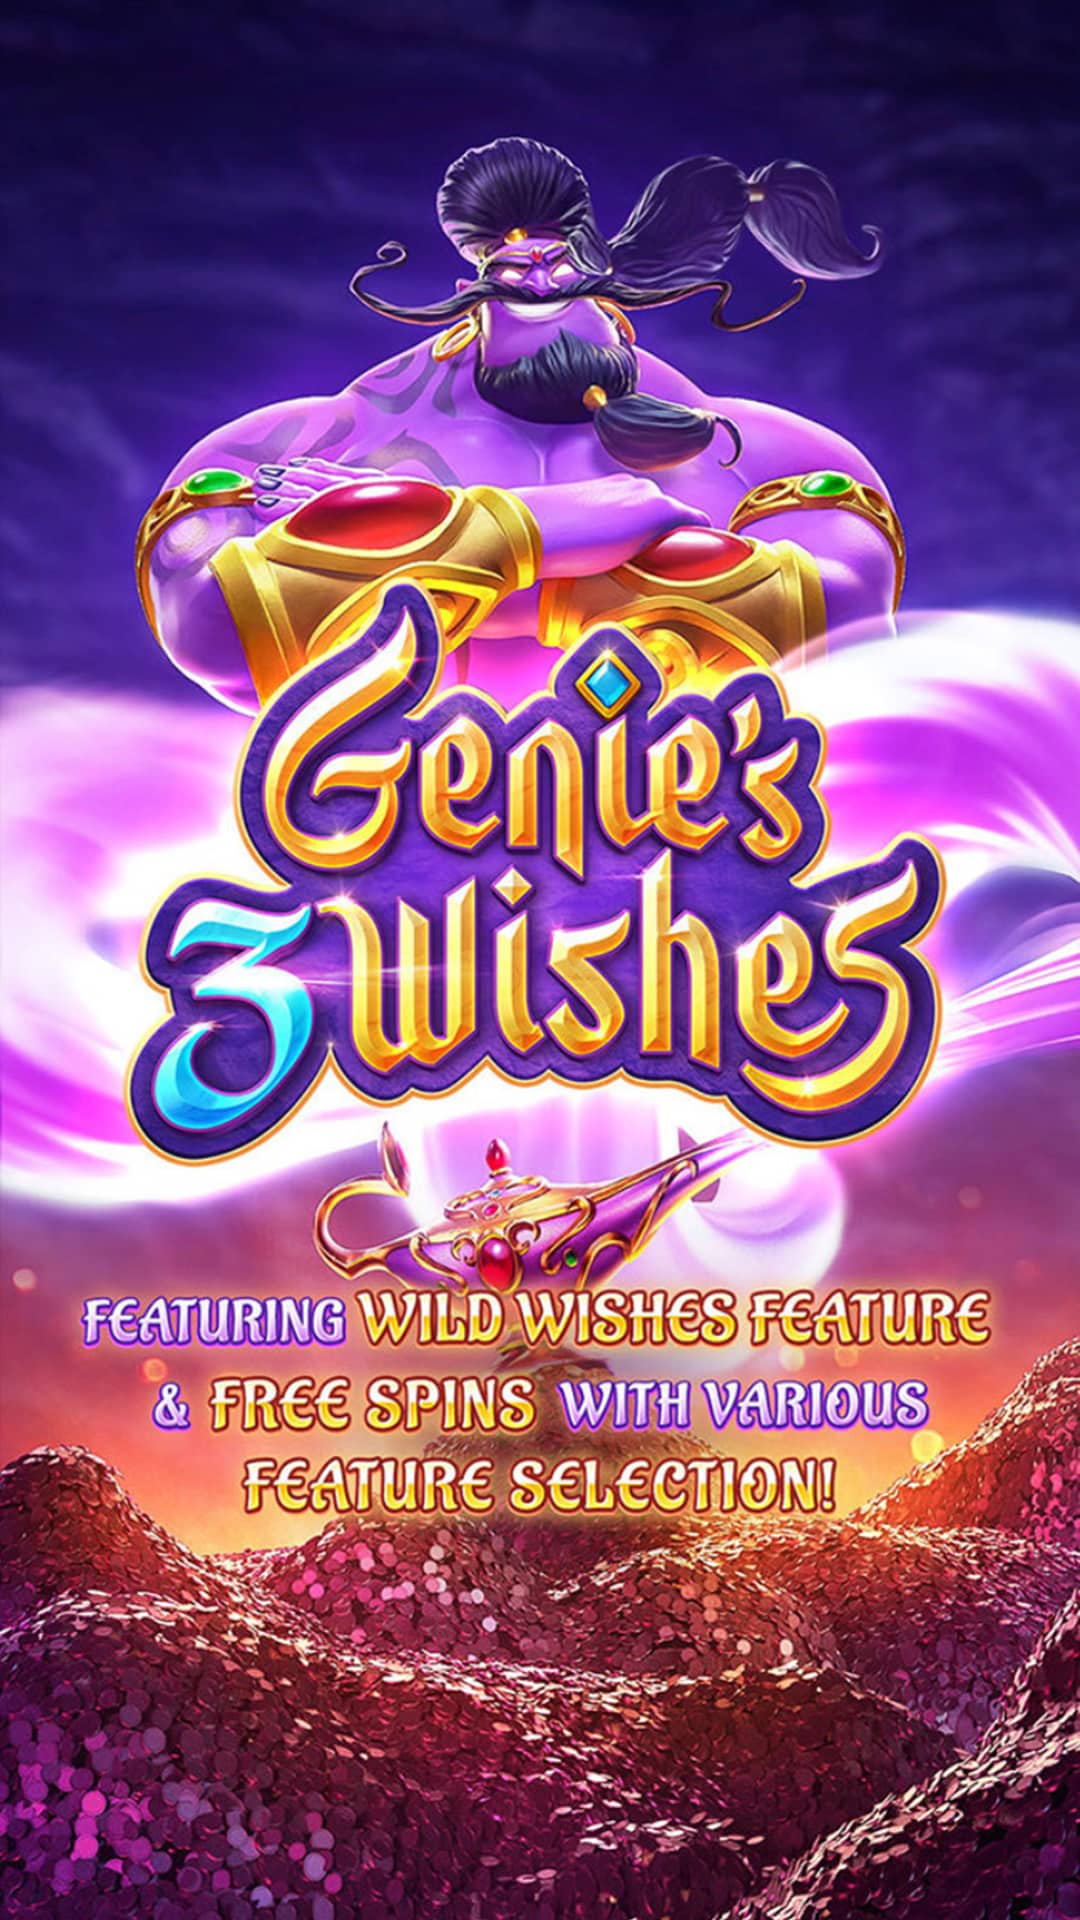 pg genie 3 wishes splash en